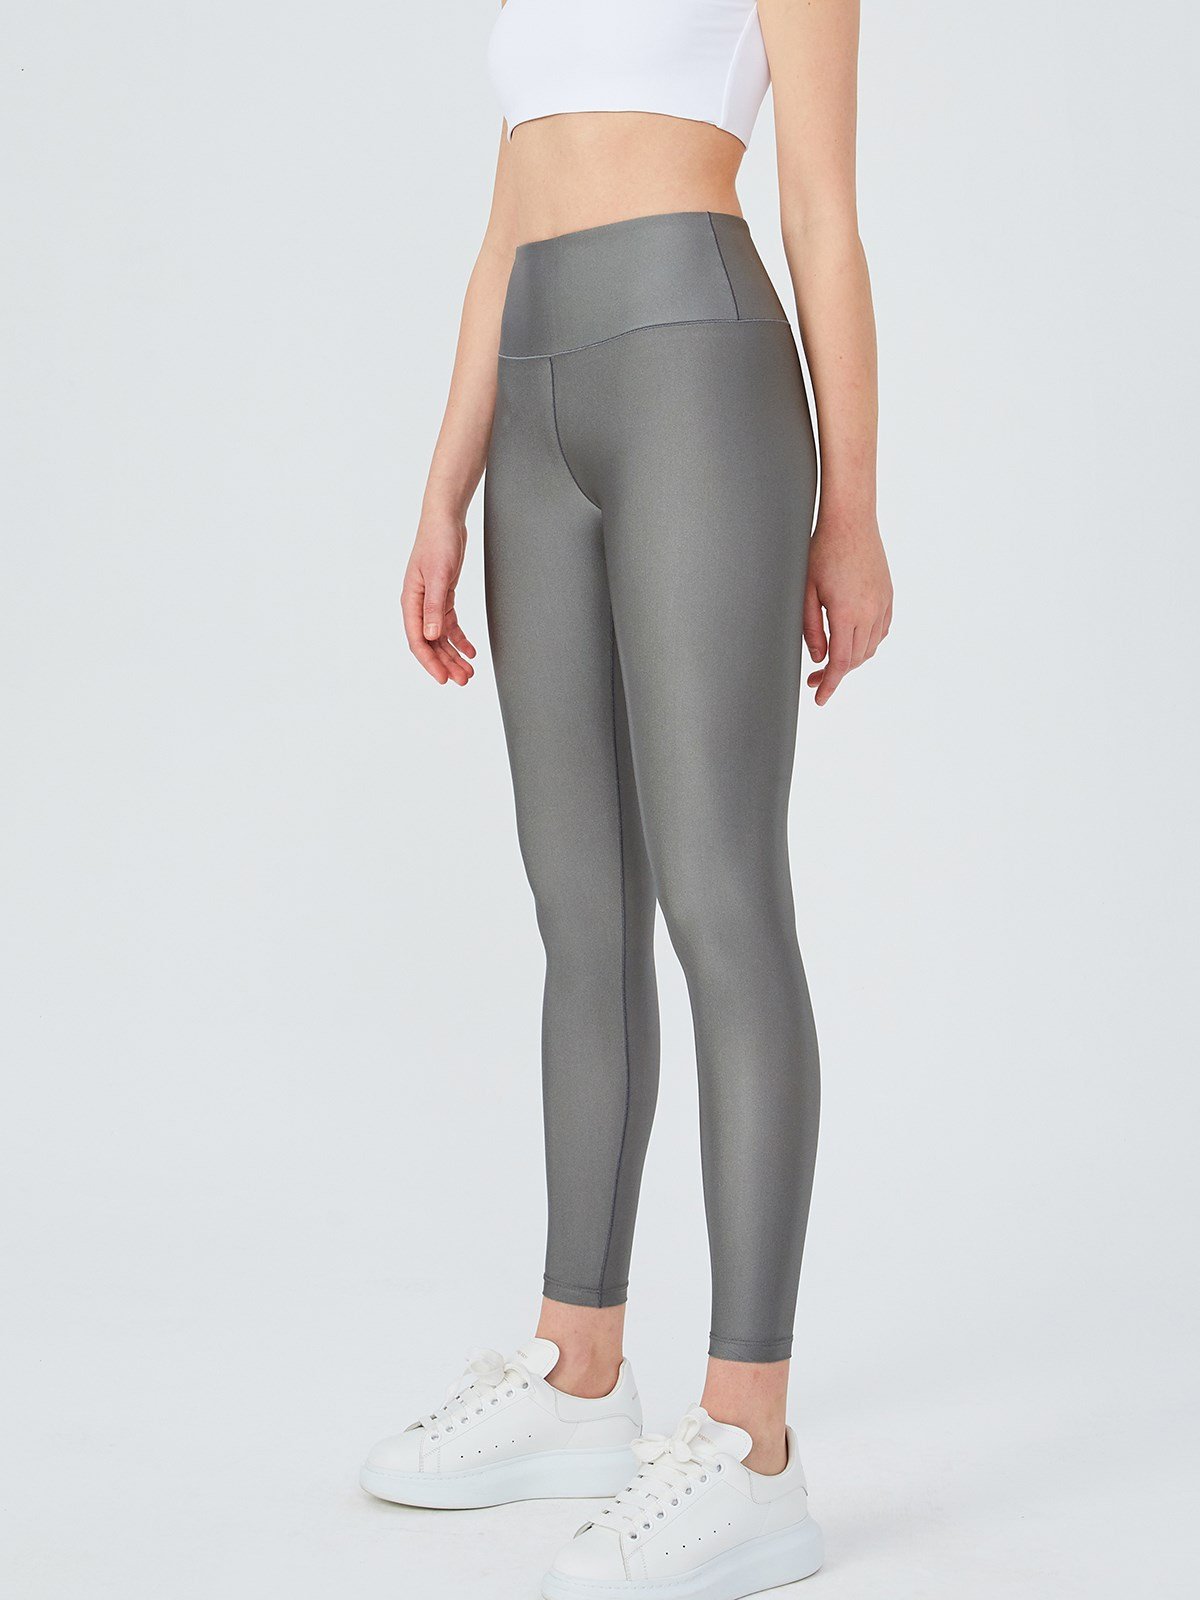 Buy FLEXICA Women Silver Shimmer Legging (XXL, Silver) at